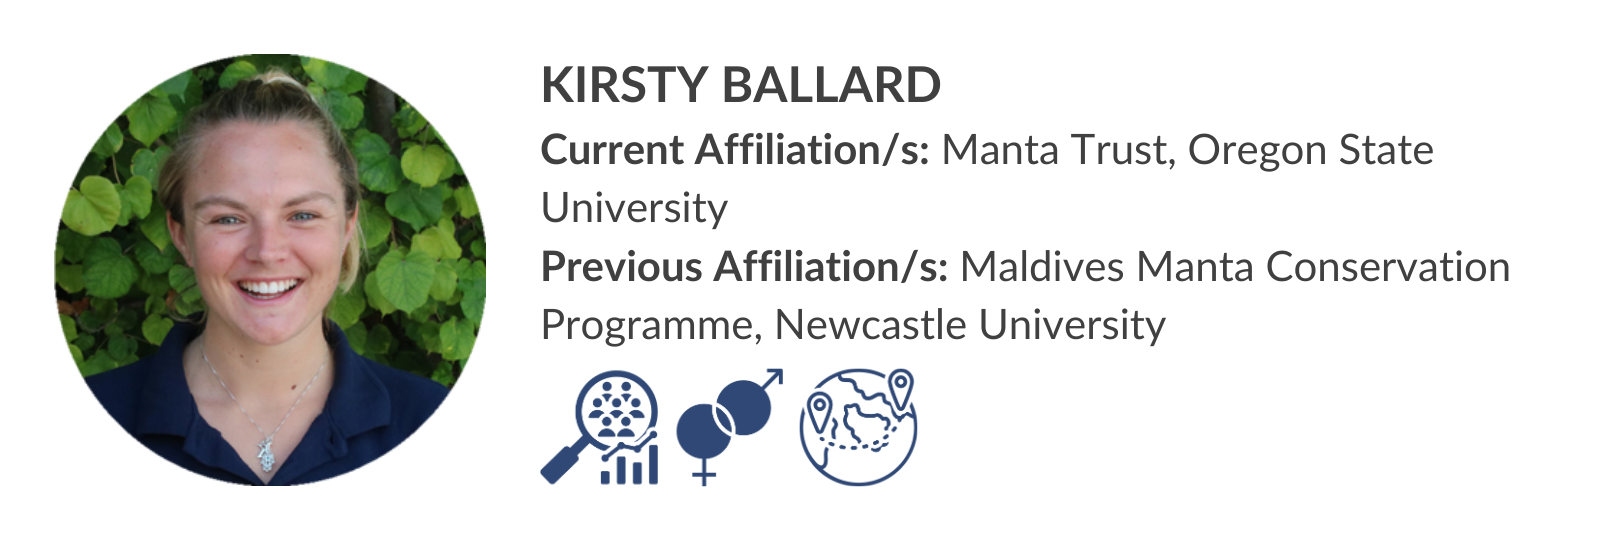 Kirsty Ballard.png